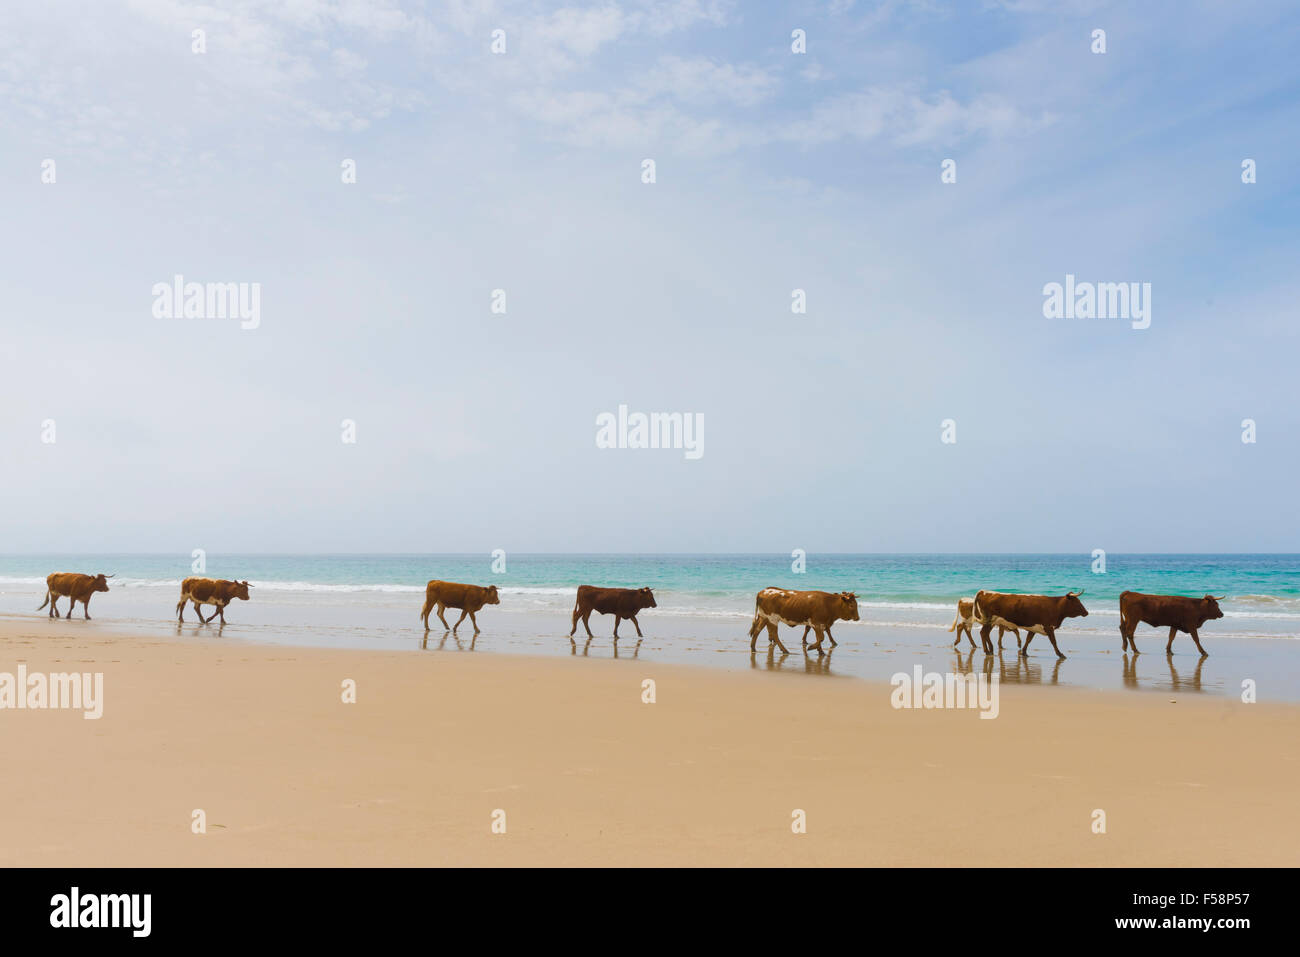 Group of cows walking along the beach. Bolonia, Tarifa, Costa de la Luz, Andalusia, Southern Spain. Stock Photo